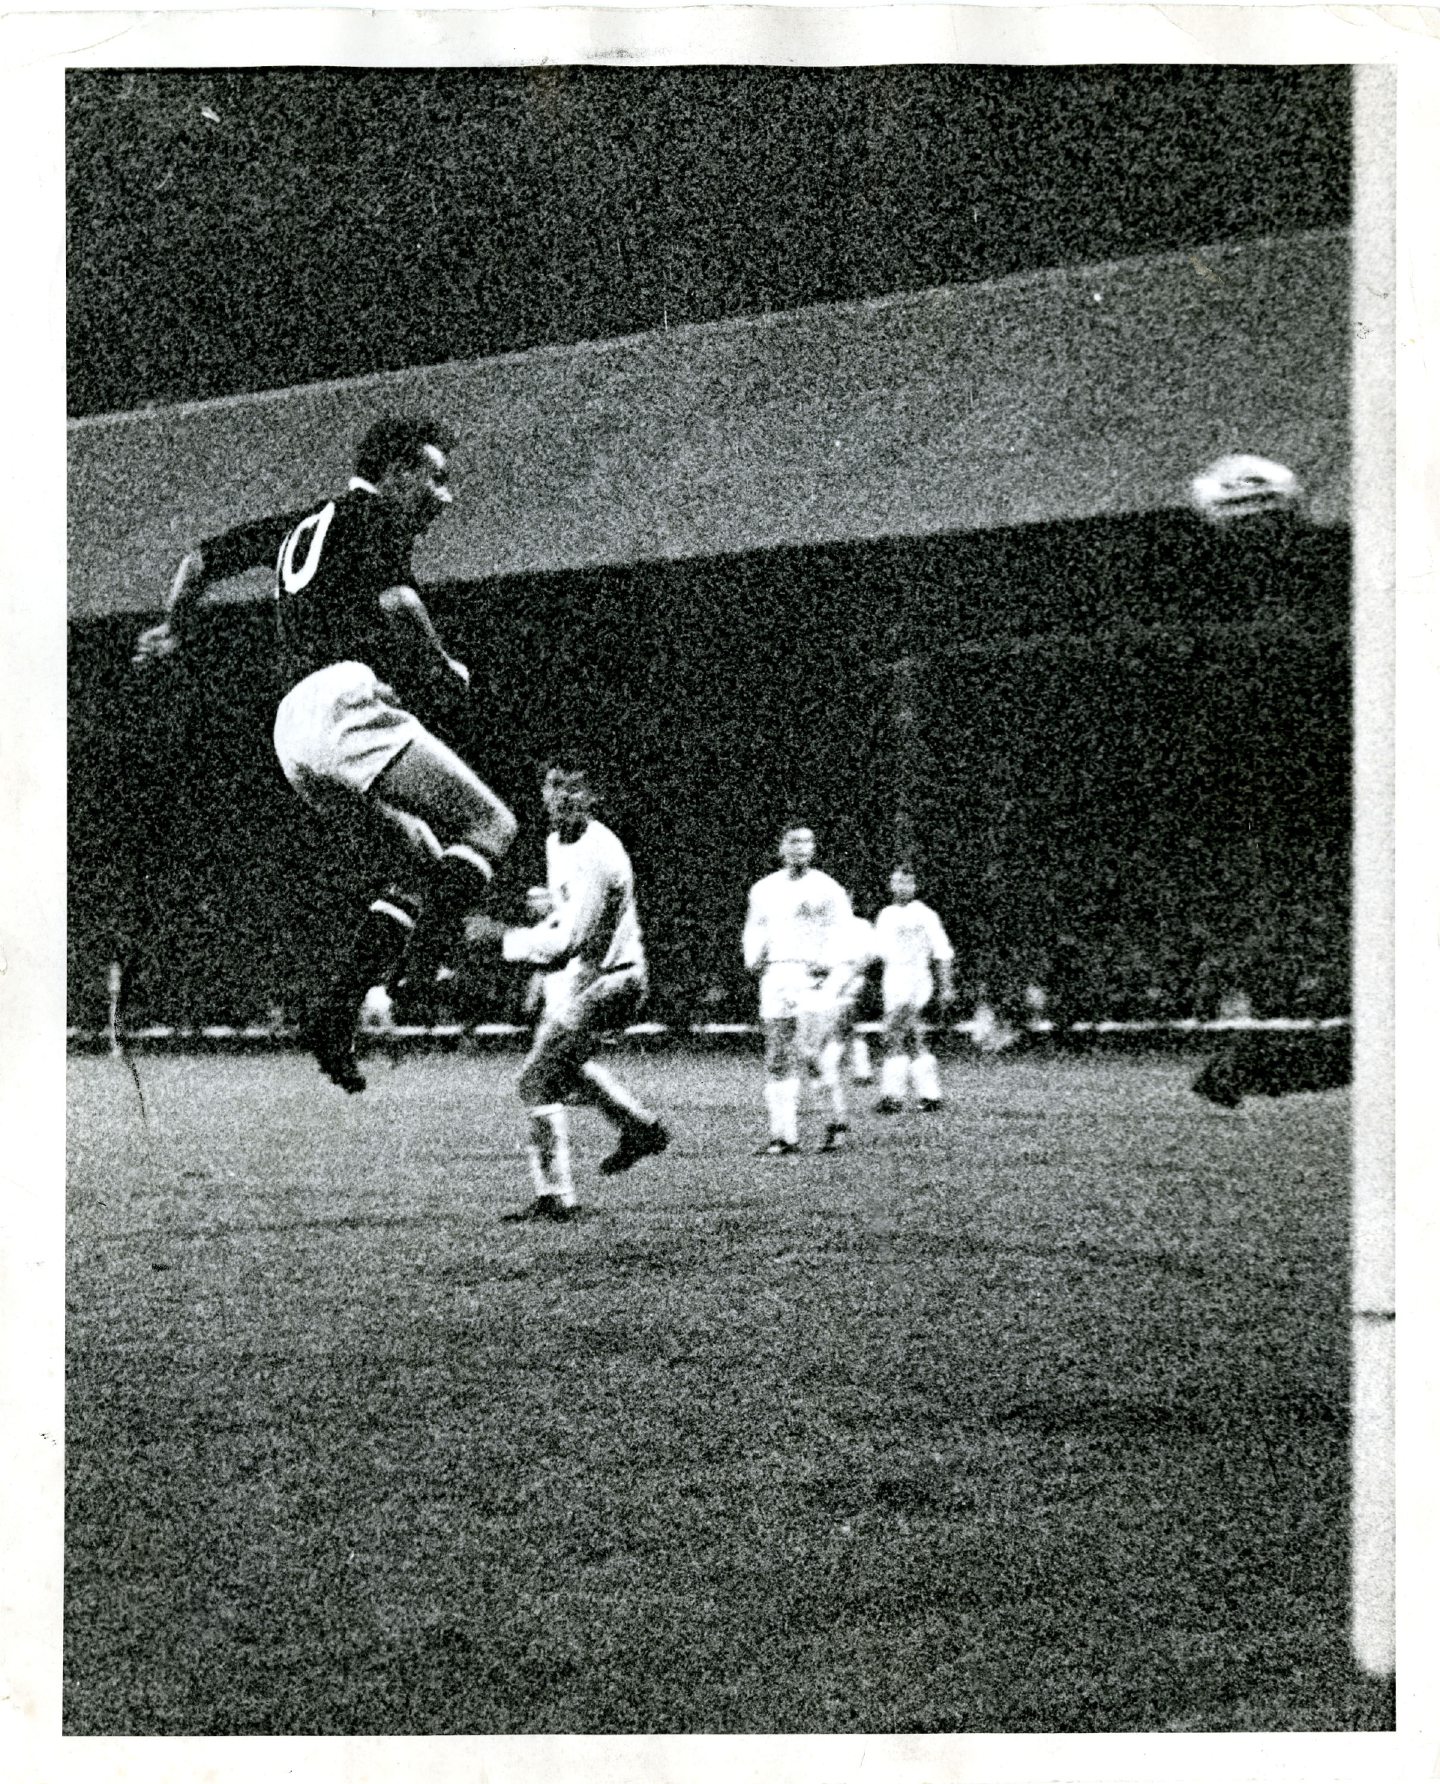 Alan Gilzean scored a hat-trick against the West German champions.